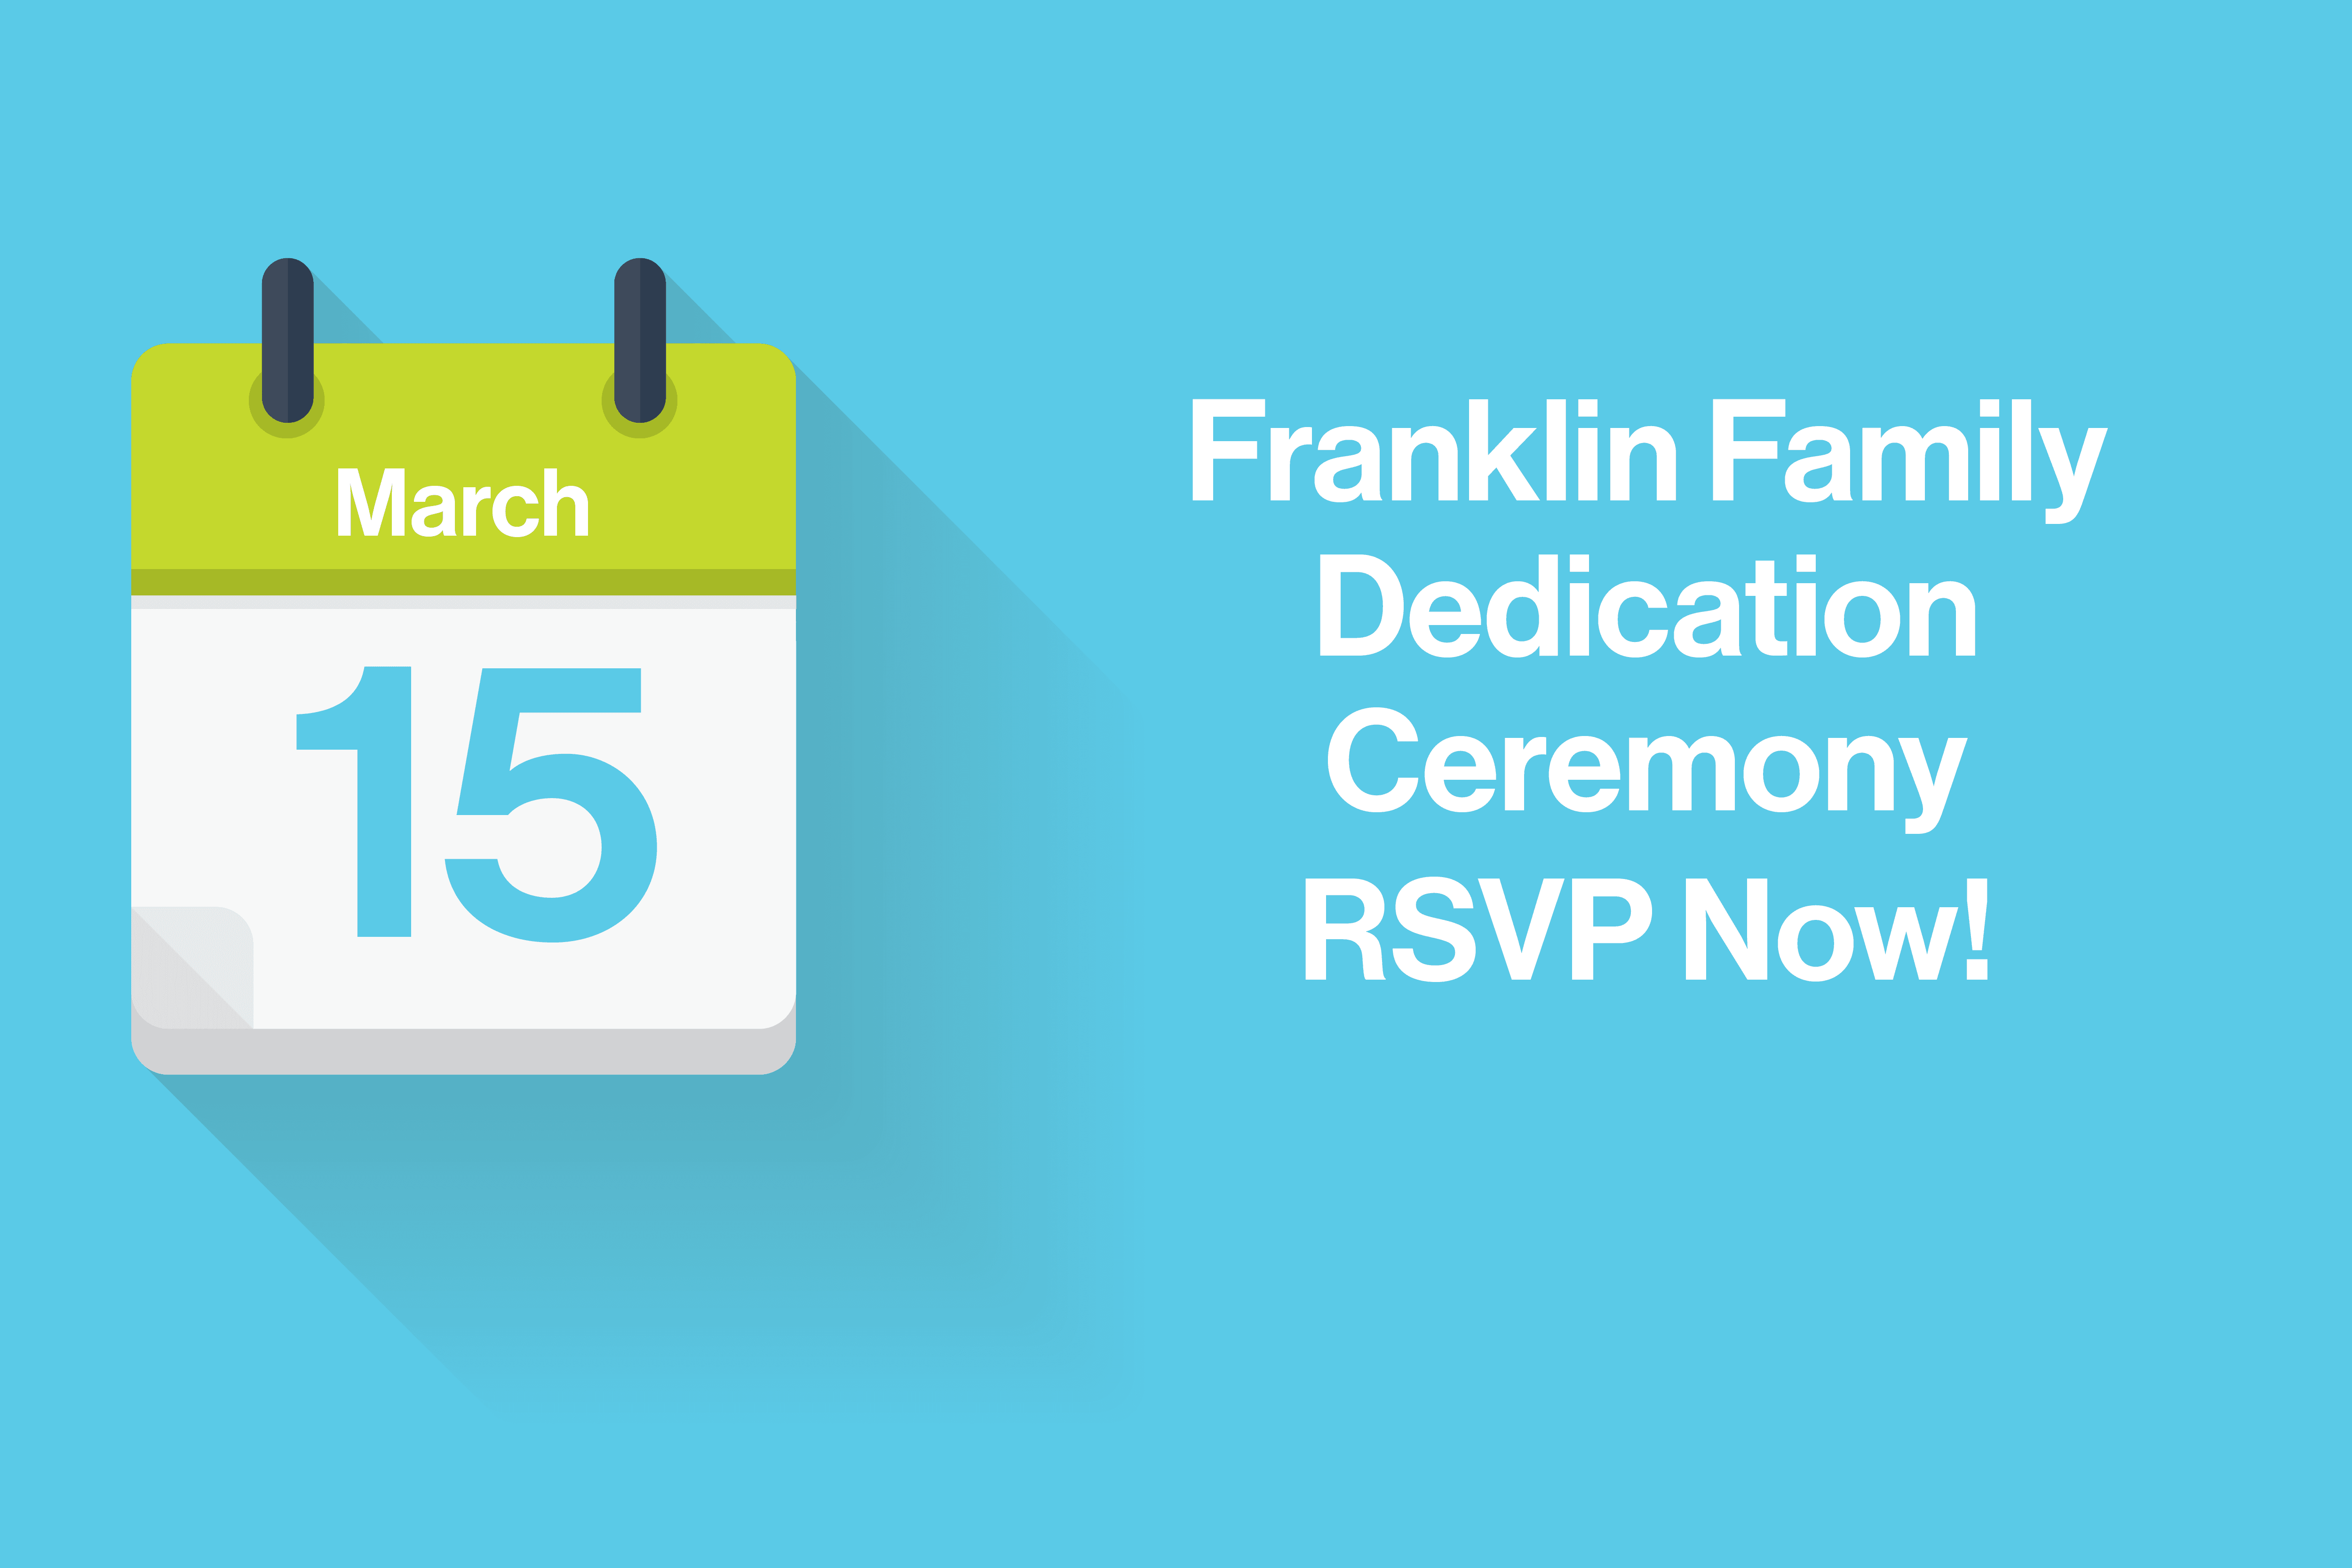 Franklin Family Dedication Ceremony